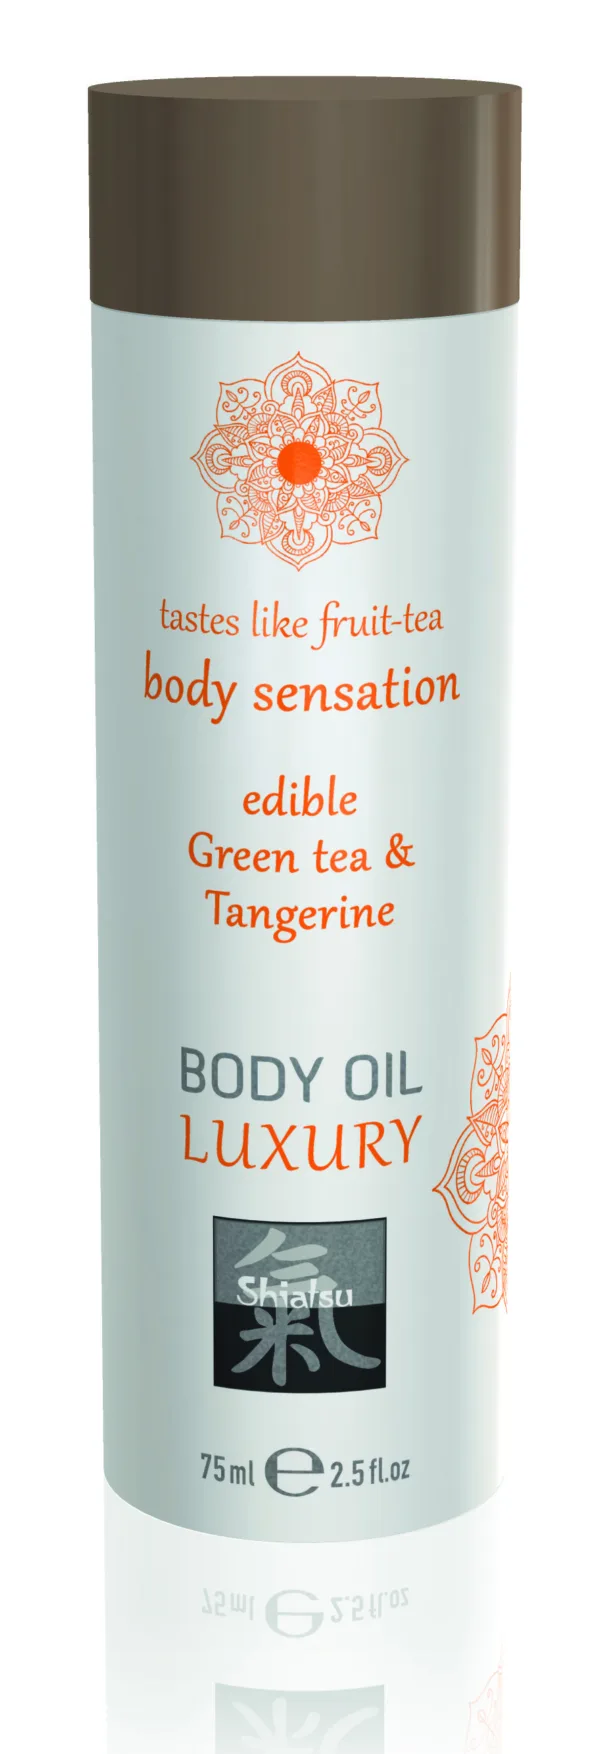 Shiatsu Luxury Body Oil Edible Erotic Massage Stimulating Aphrodisiac Taste - Body Care Massage Oil Shiatsu - Mindadultshop